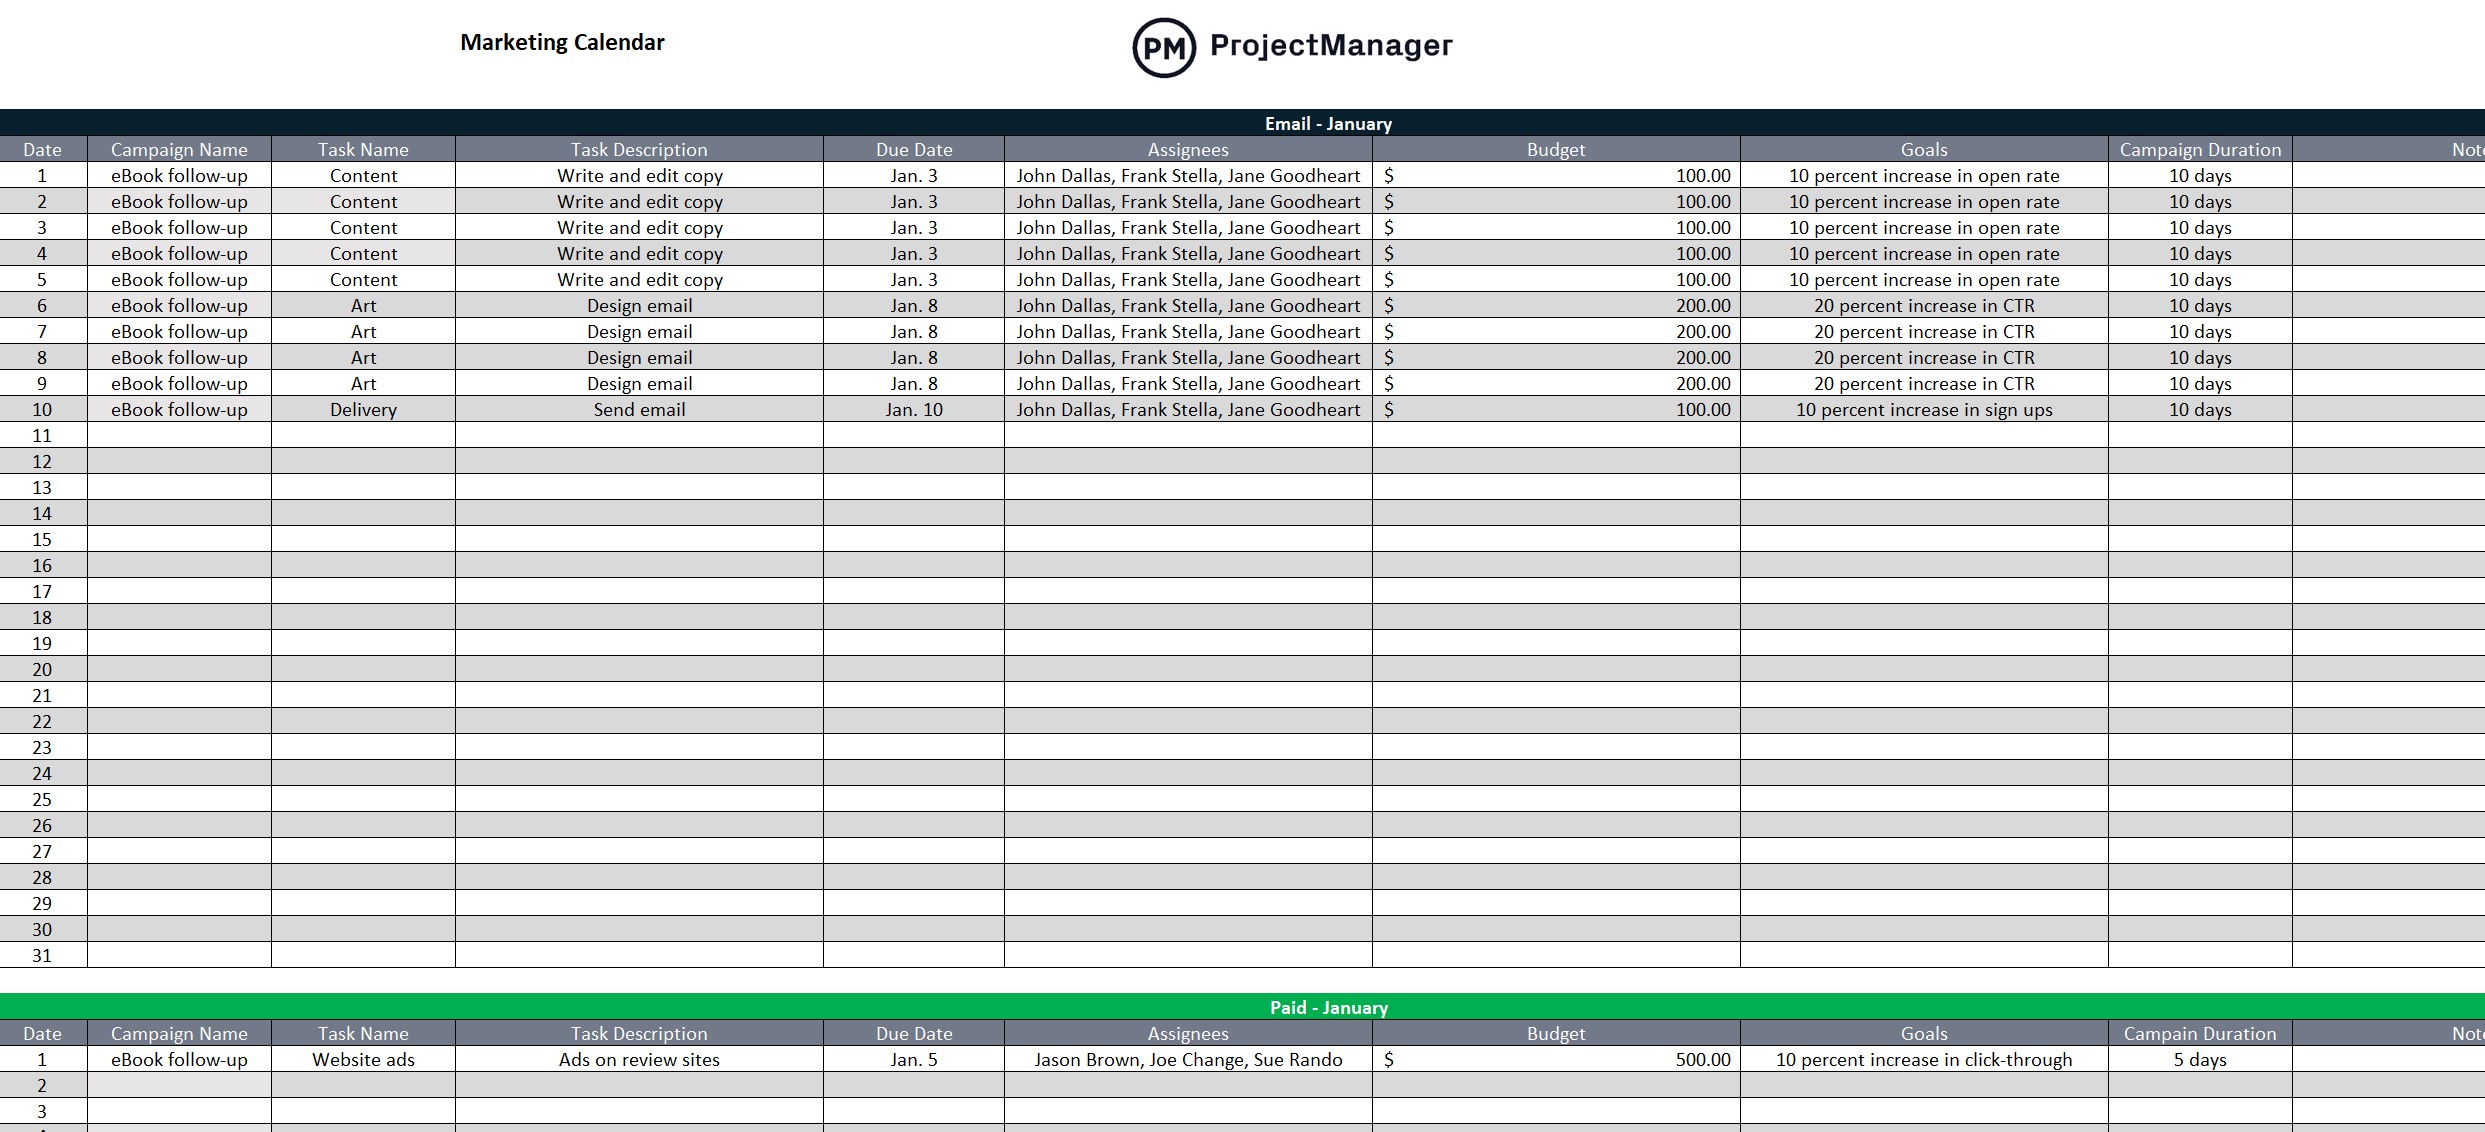 Marketing calendar template in ProjectManager